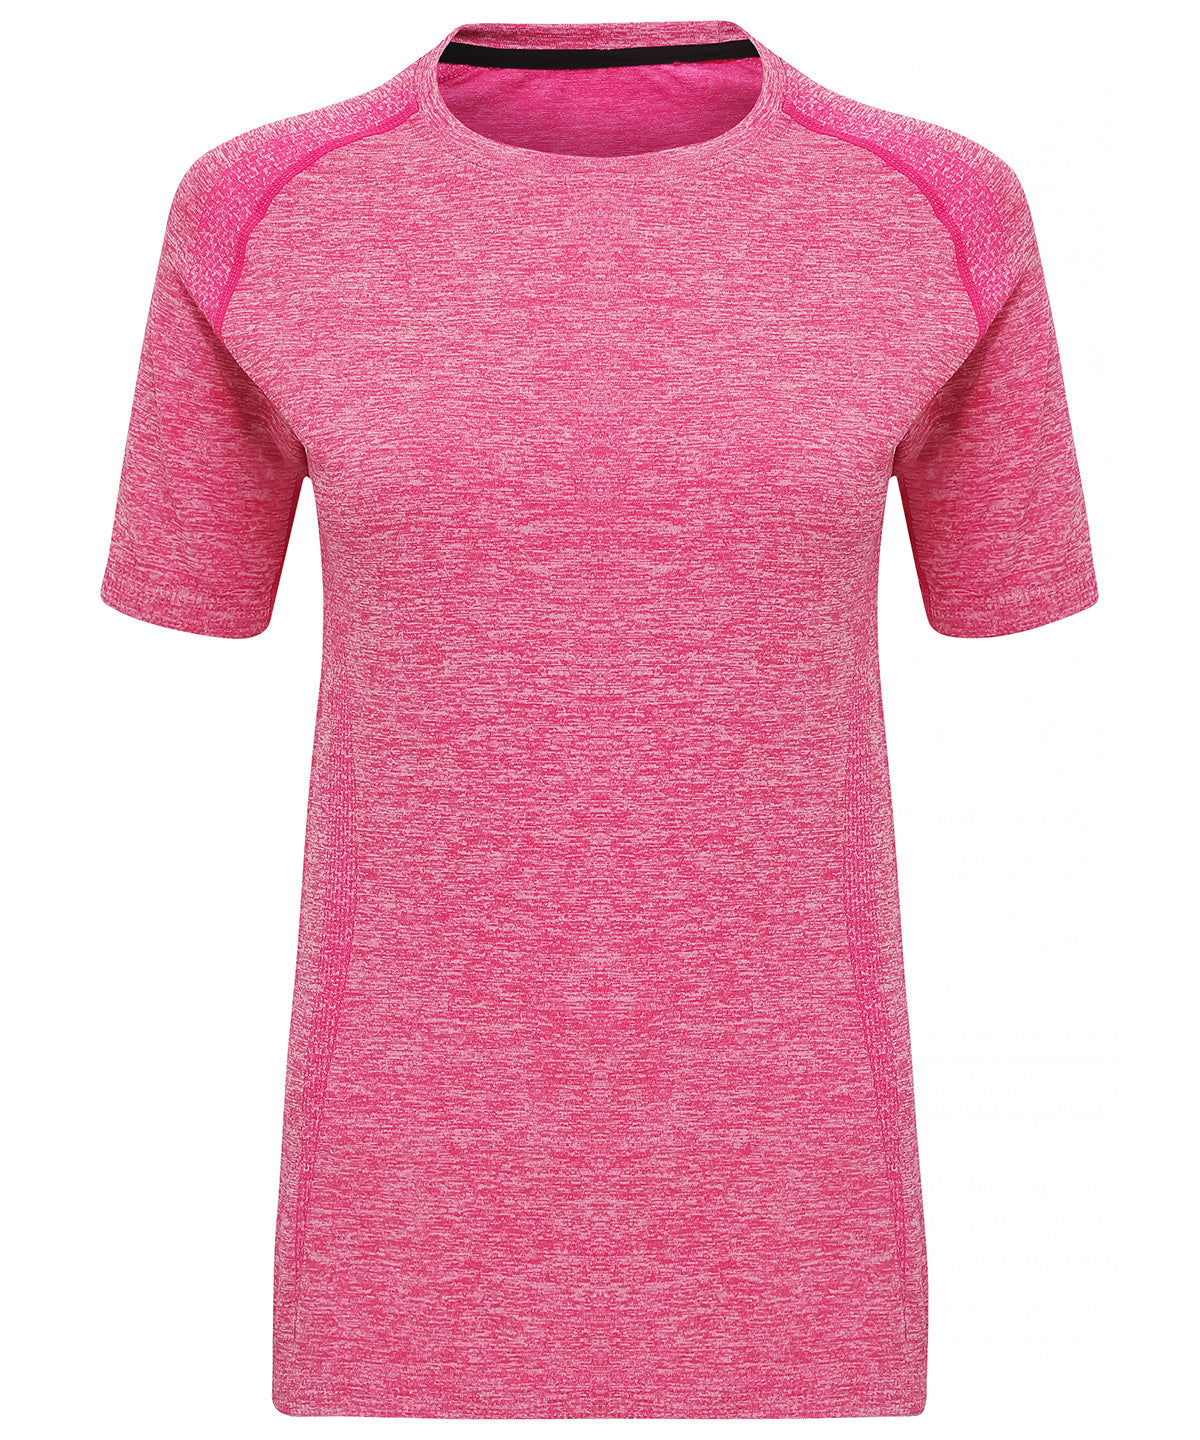 Women's TriDri® seamless '3D fit' multi-sport performance short sleeve top